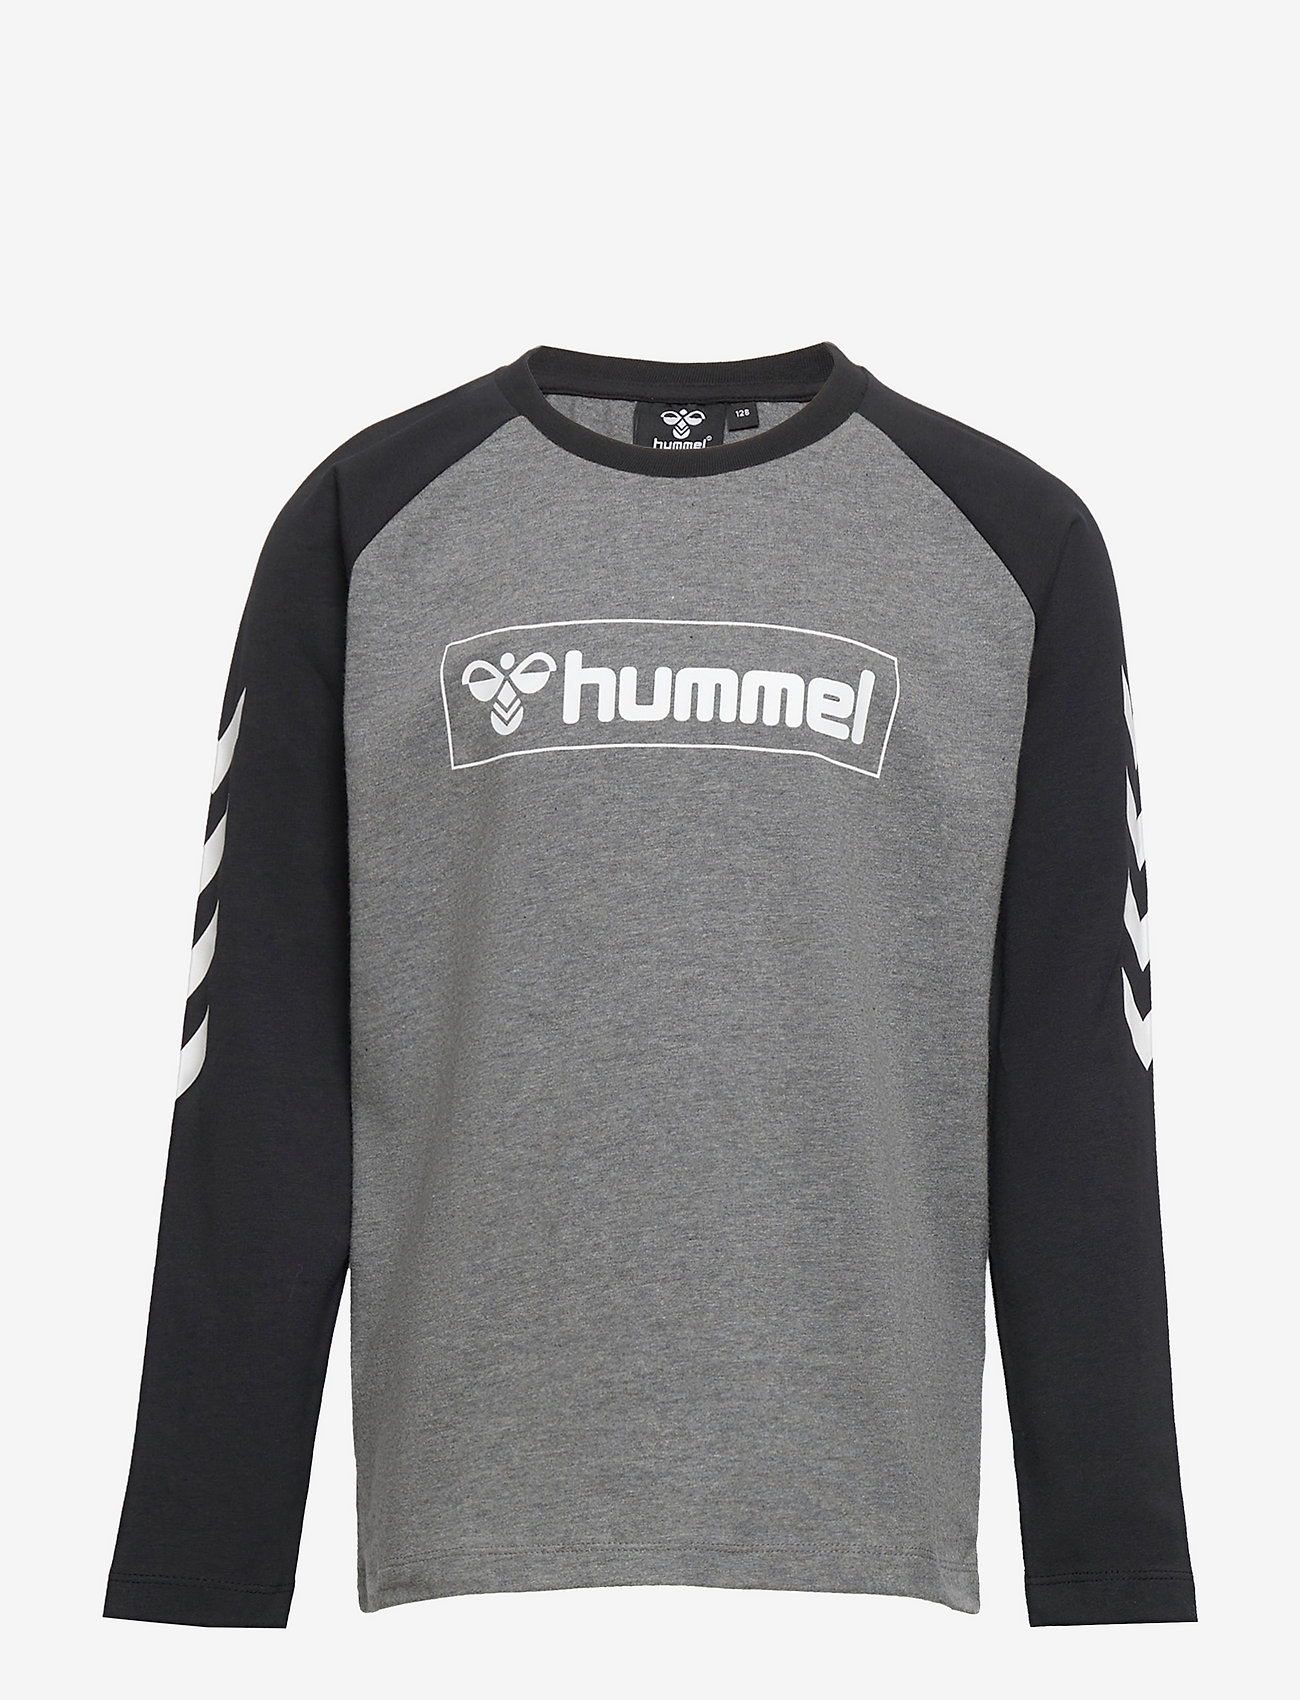 Hummel - hmlBOX T-SHIRT L/S - długi rękaw - medium melange - 0